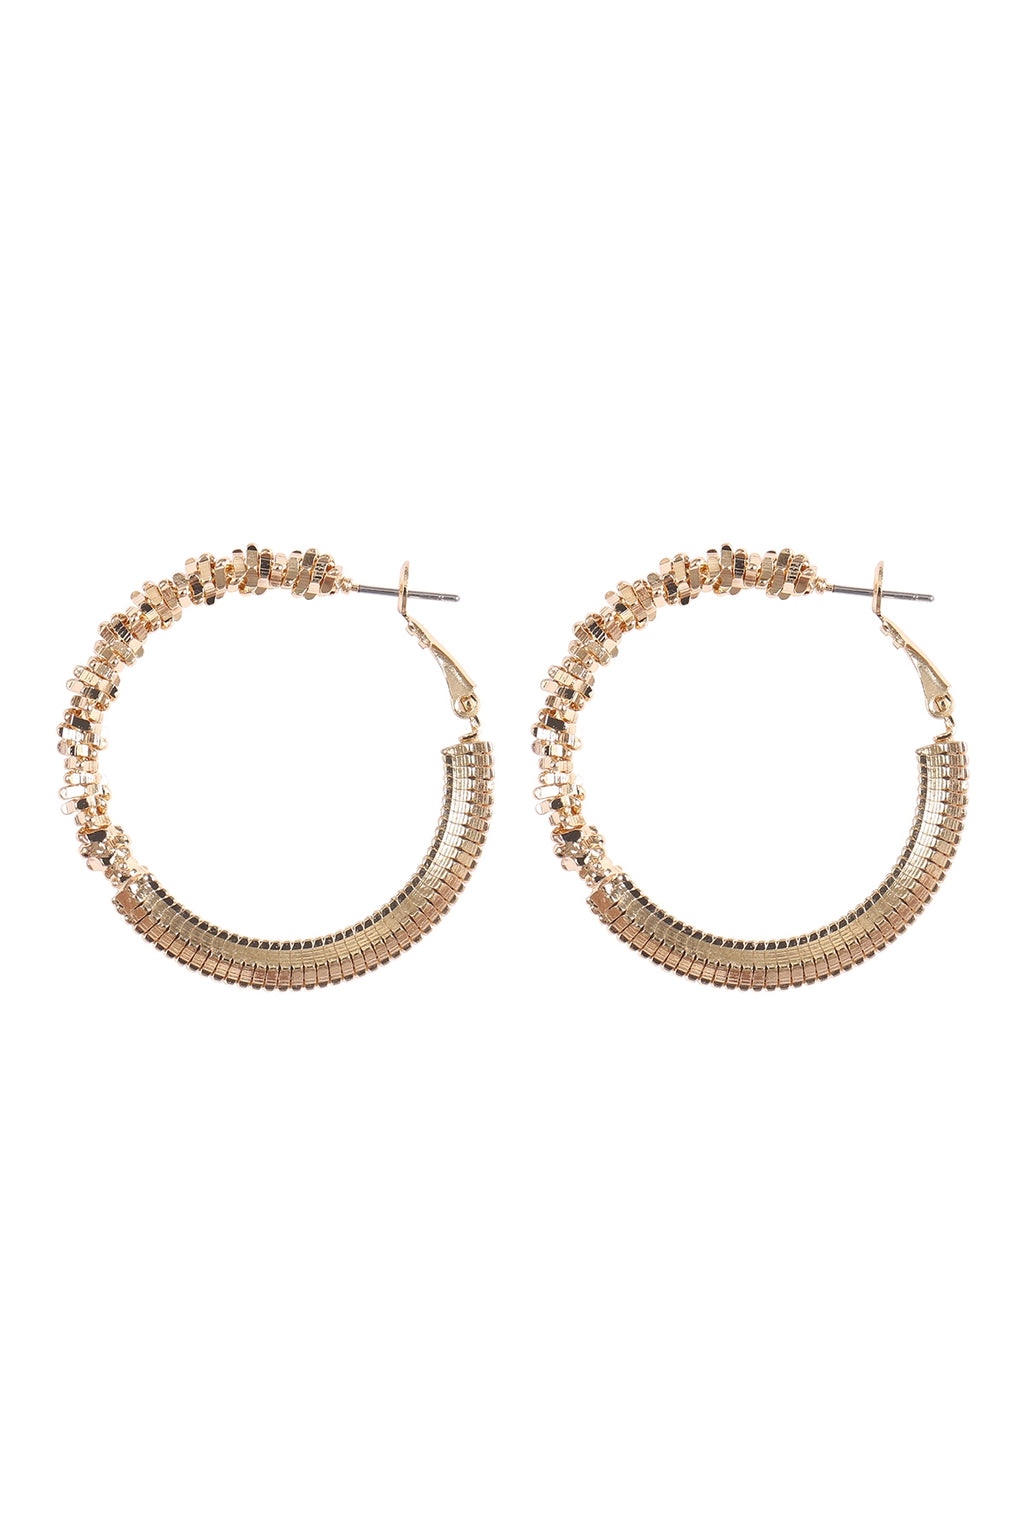 Abstract Textured Hoop Lock Earrings Gold - Pack of 6